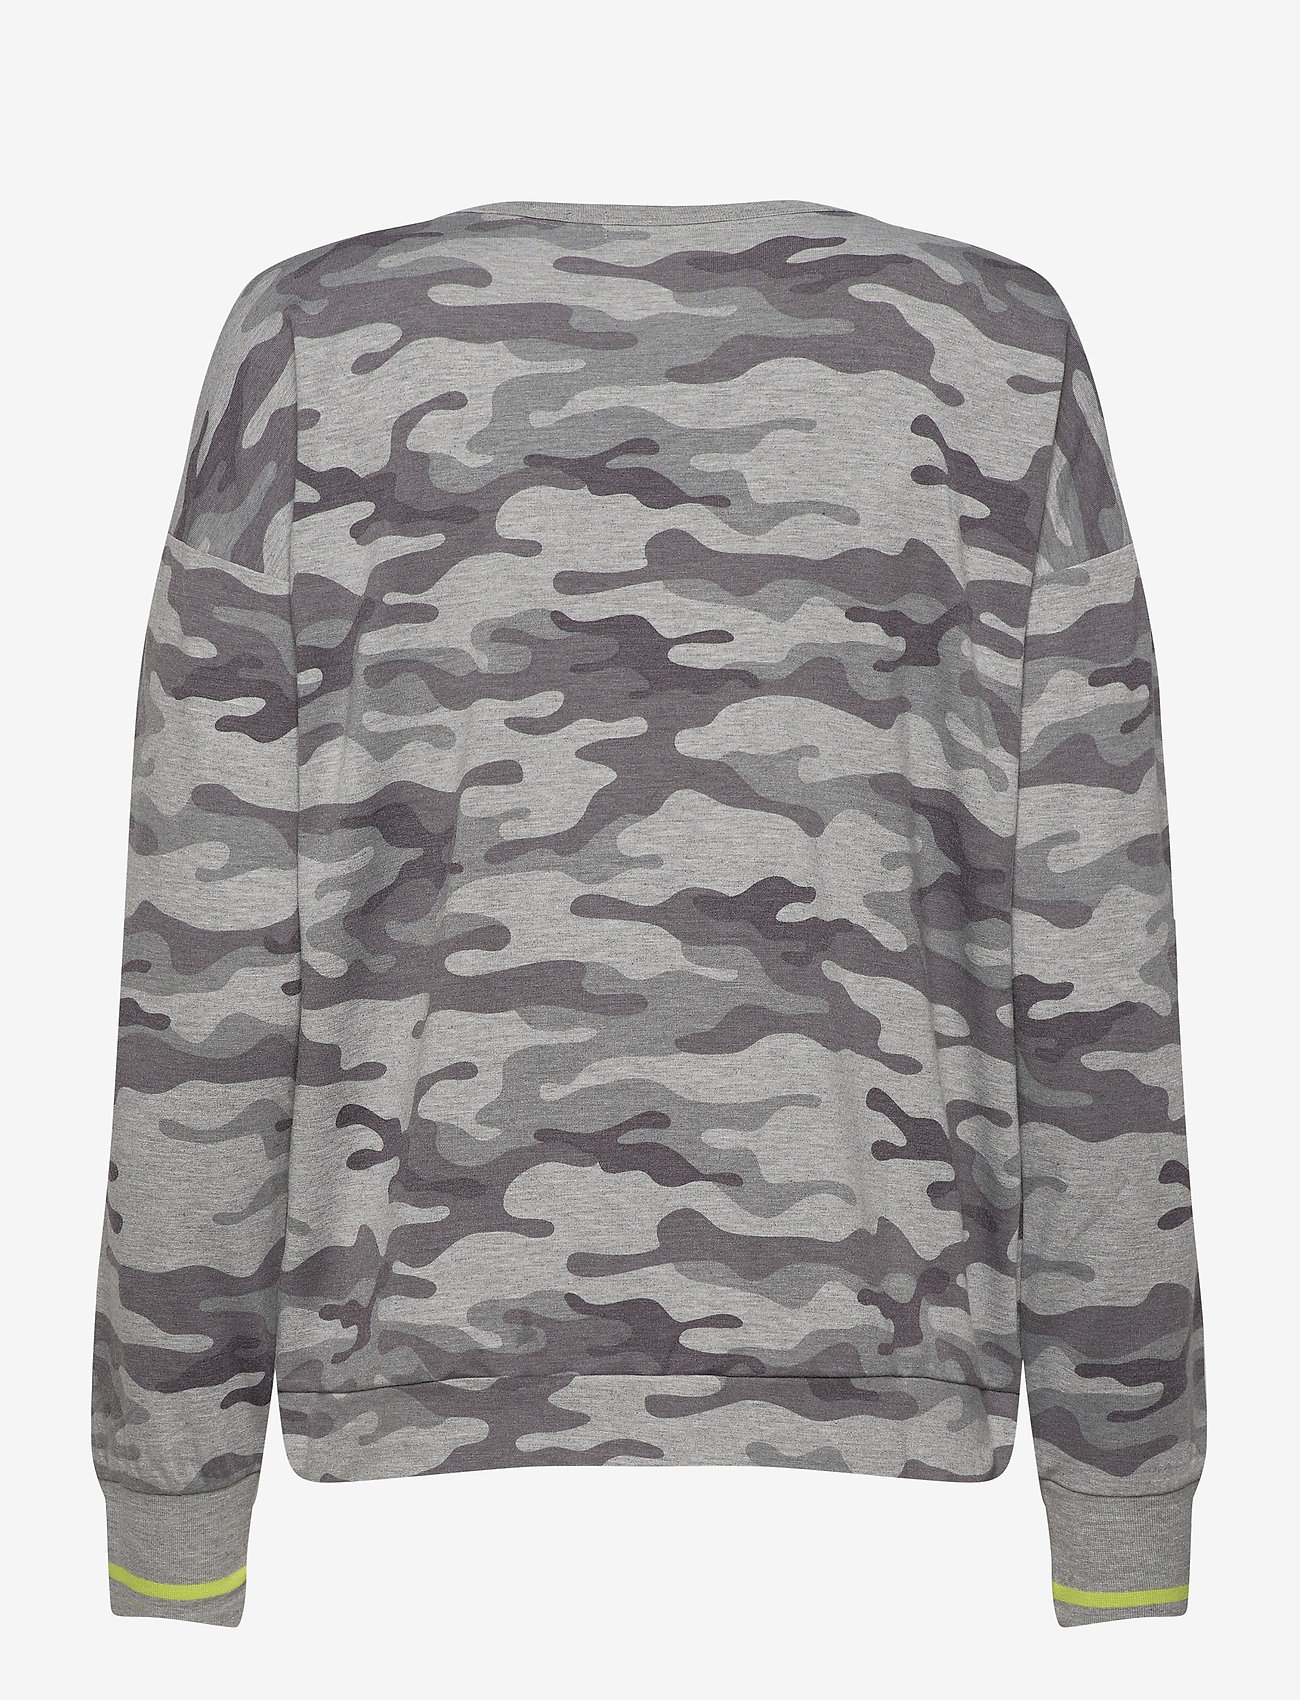 PJ Salvage - l/s shirt - women - grey - 1